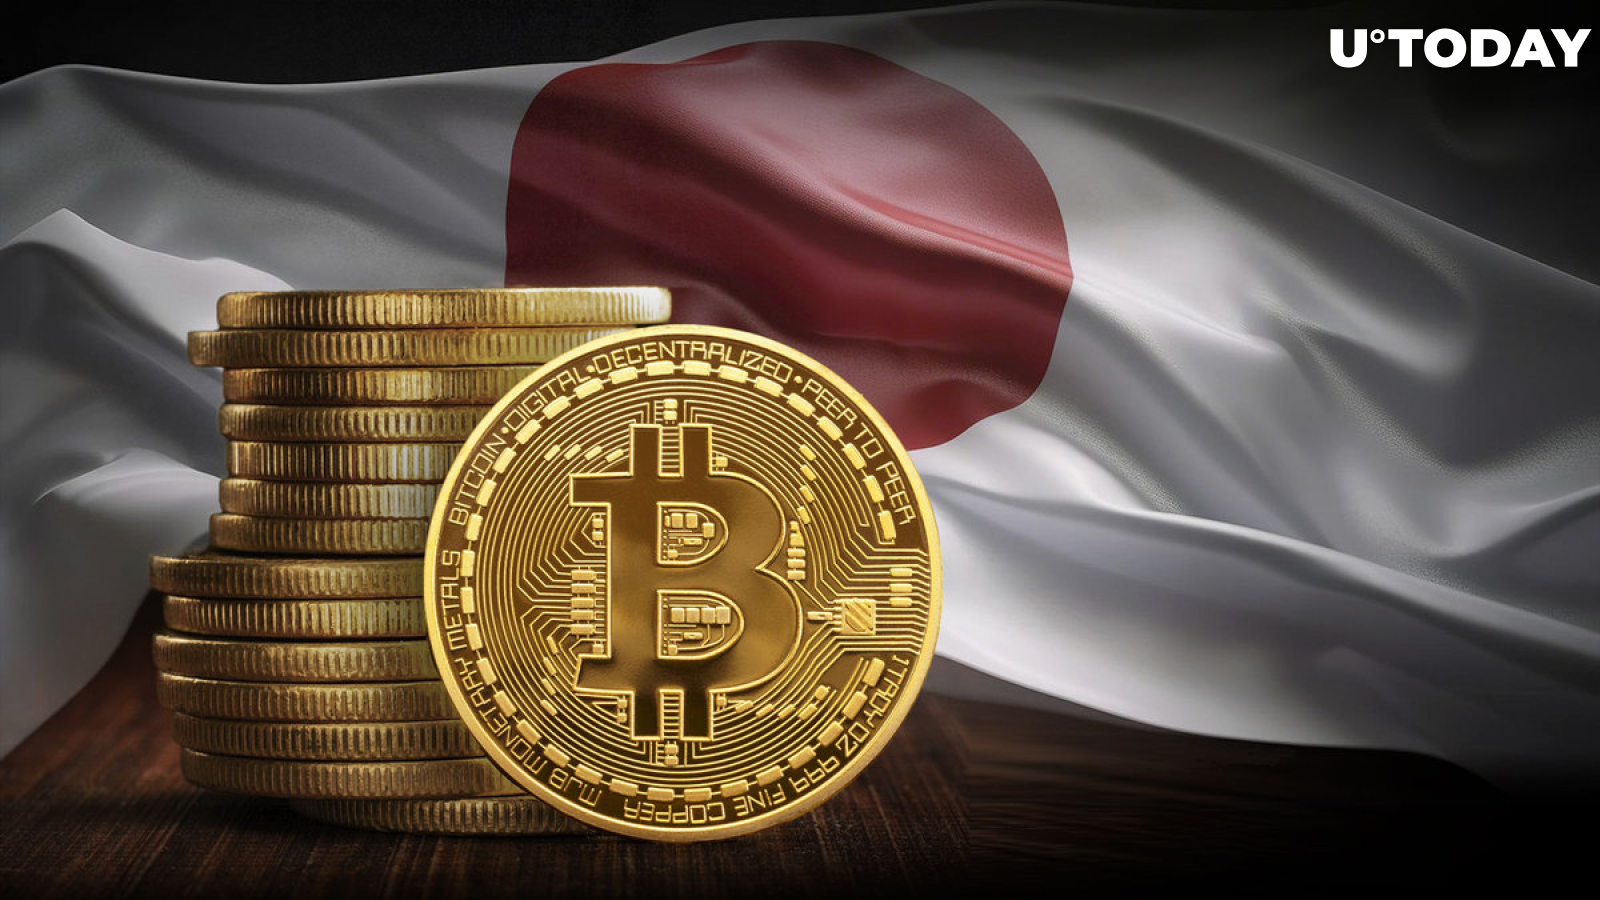 Bitcoin ทำสถิติสูงสุดตลอดกาลในญี่ปุ่นท่ามกลางการปฏิวัติด้านกฎระเบียบ